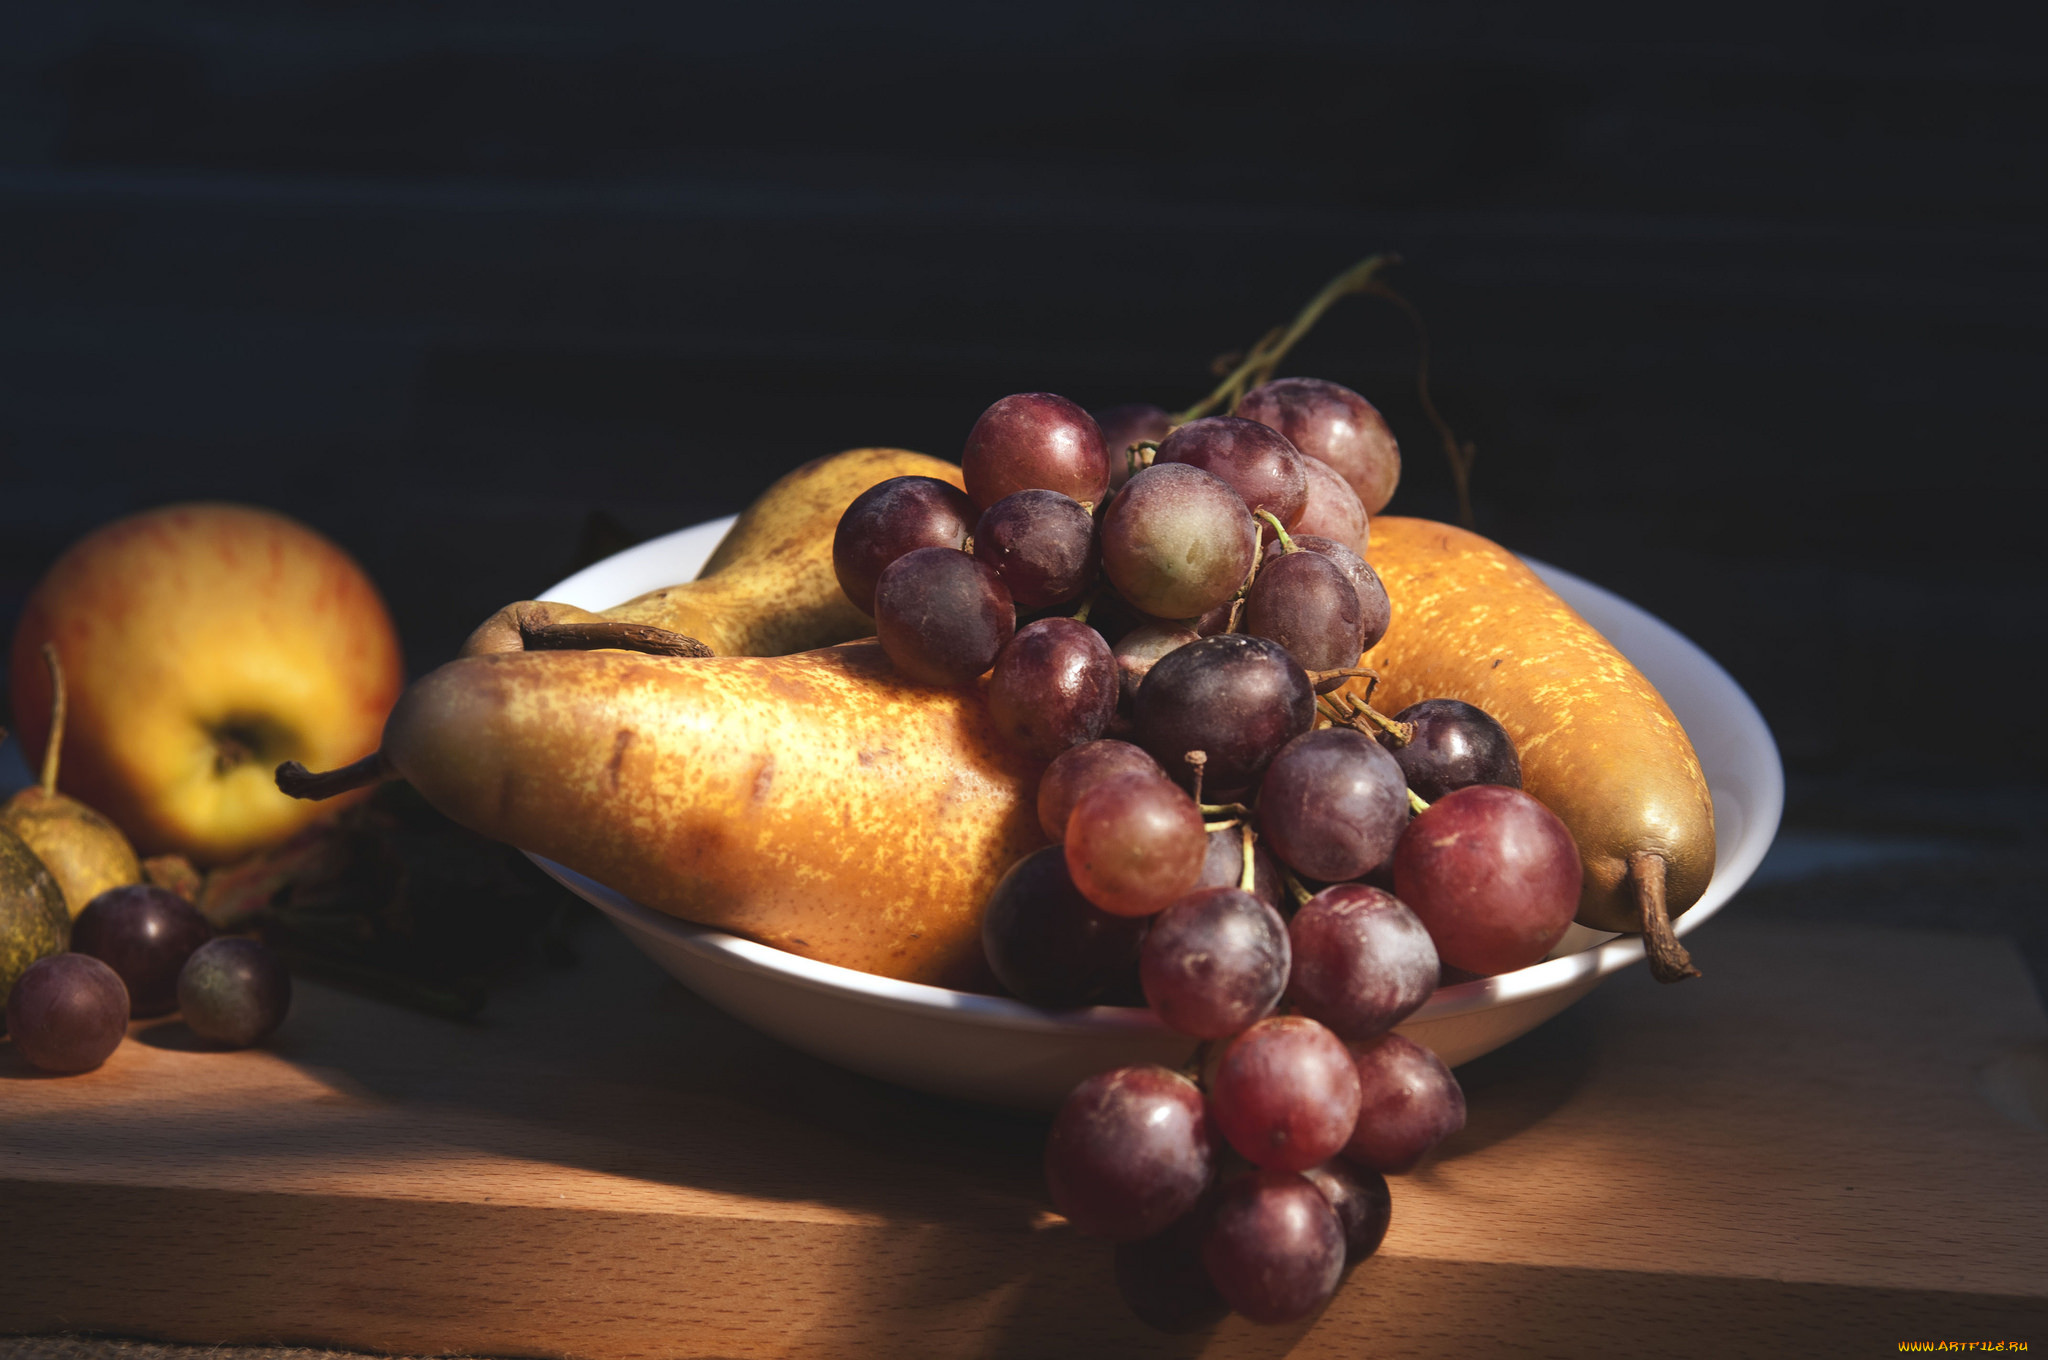 Grape pear. Груша и виноград. На столе виноград груша. Виноград груши маскарпоне. Андреас лах груша и виноград.